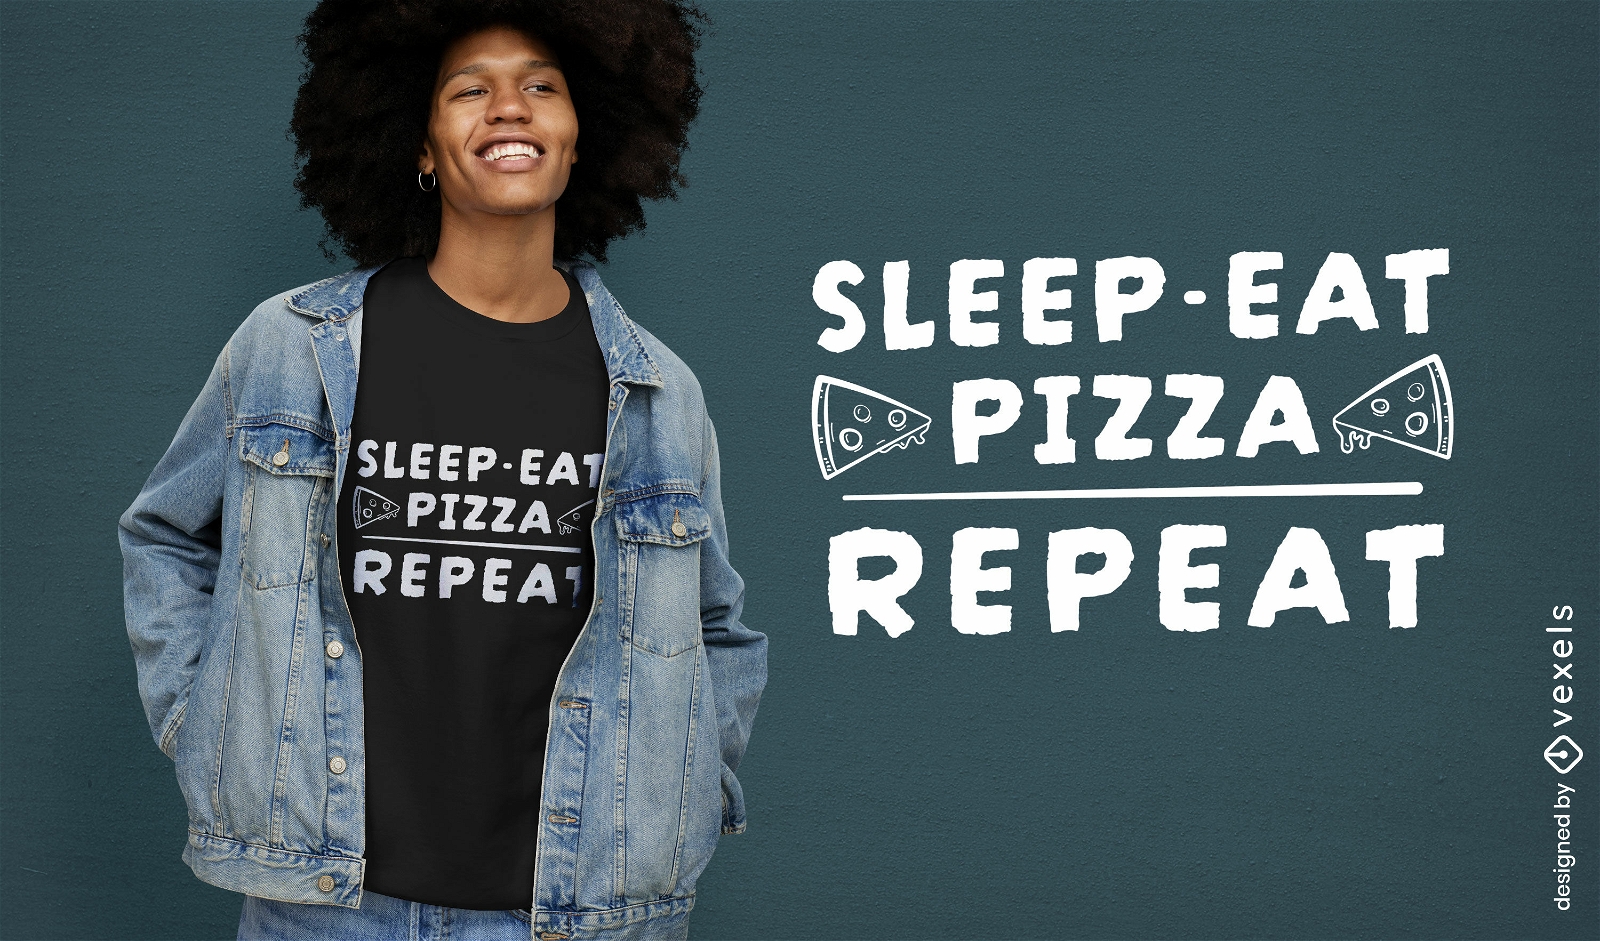 Sleep eat pizza repeat t-shirt design